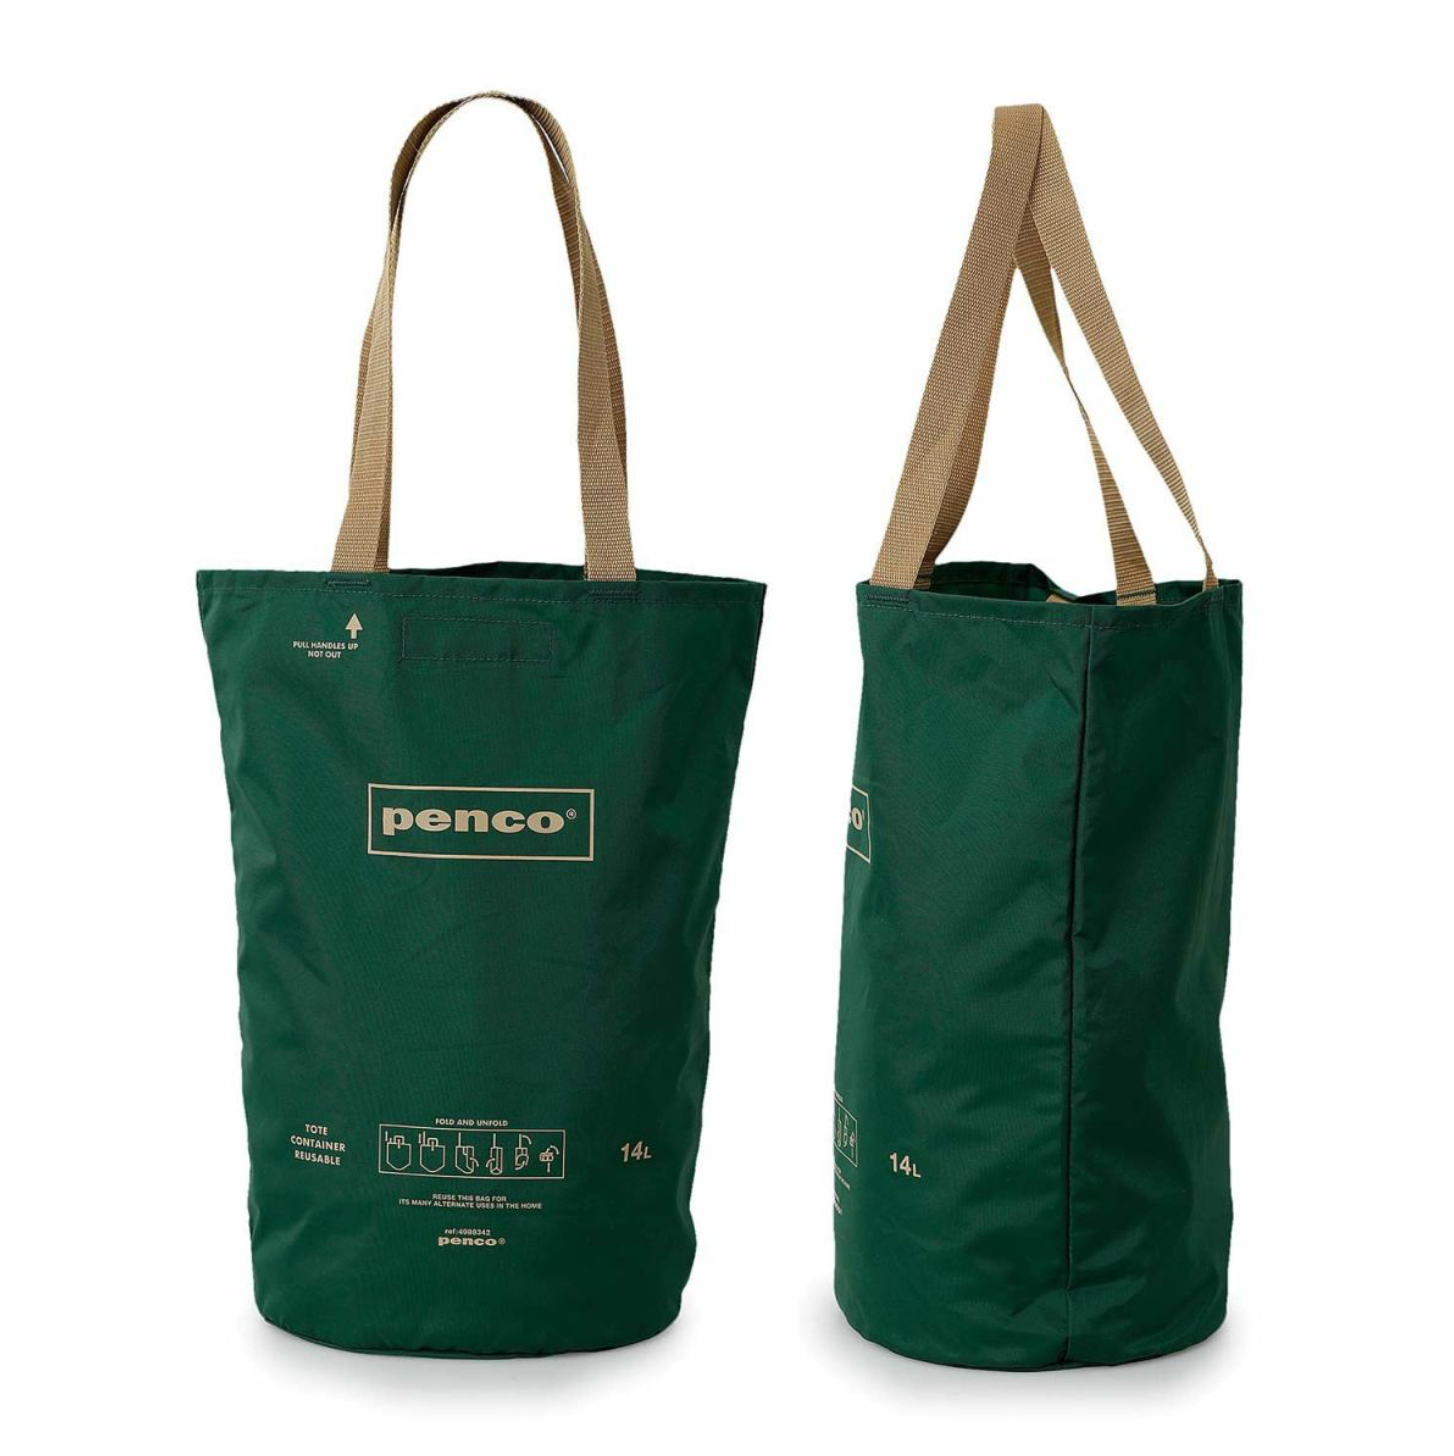 Penco Bucket Tote Bag in Dark Green